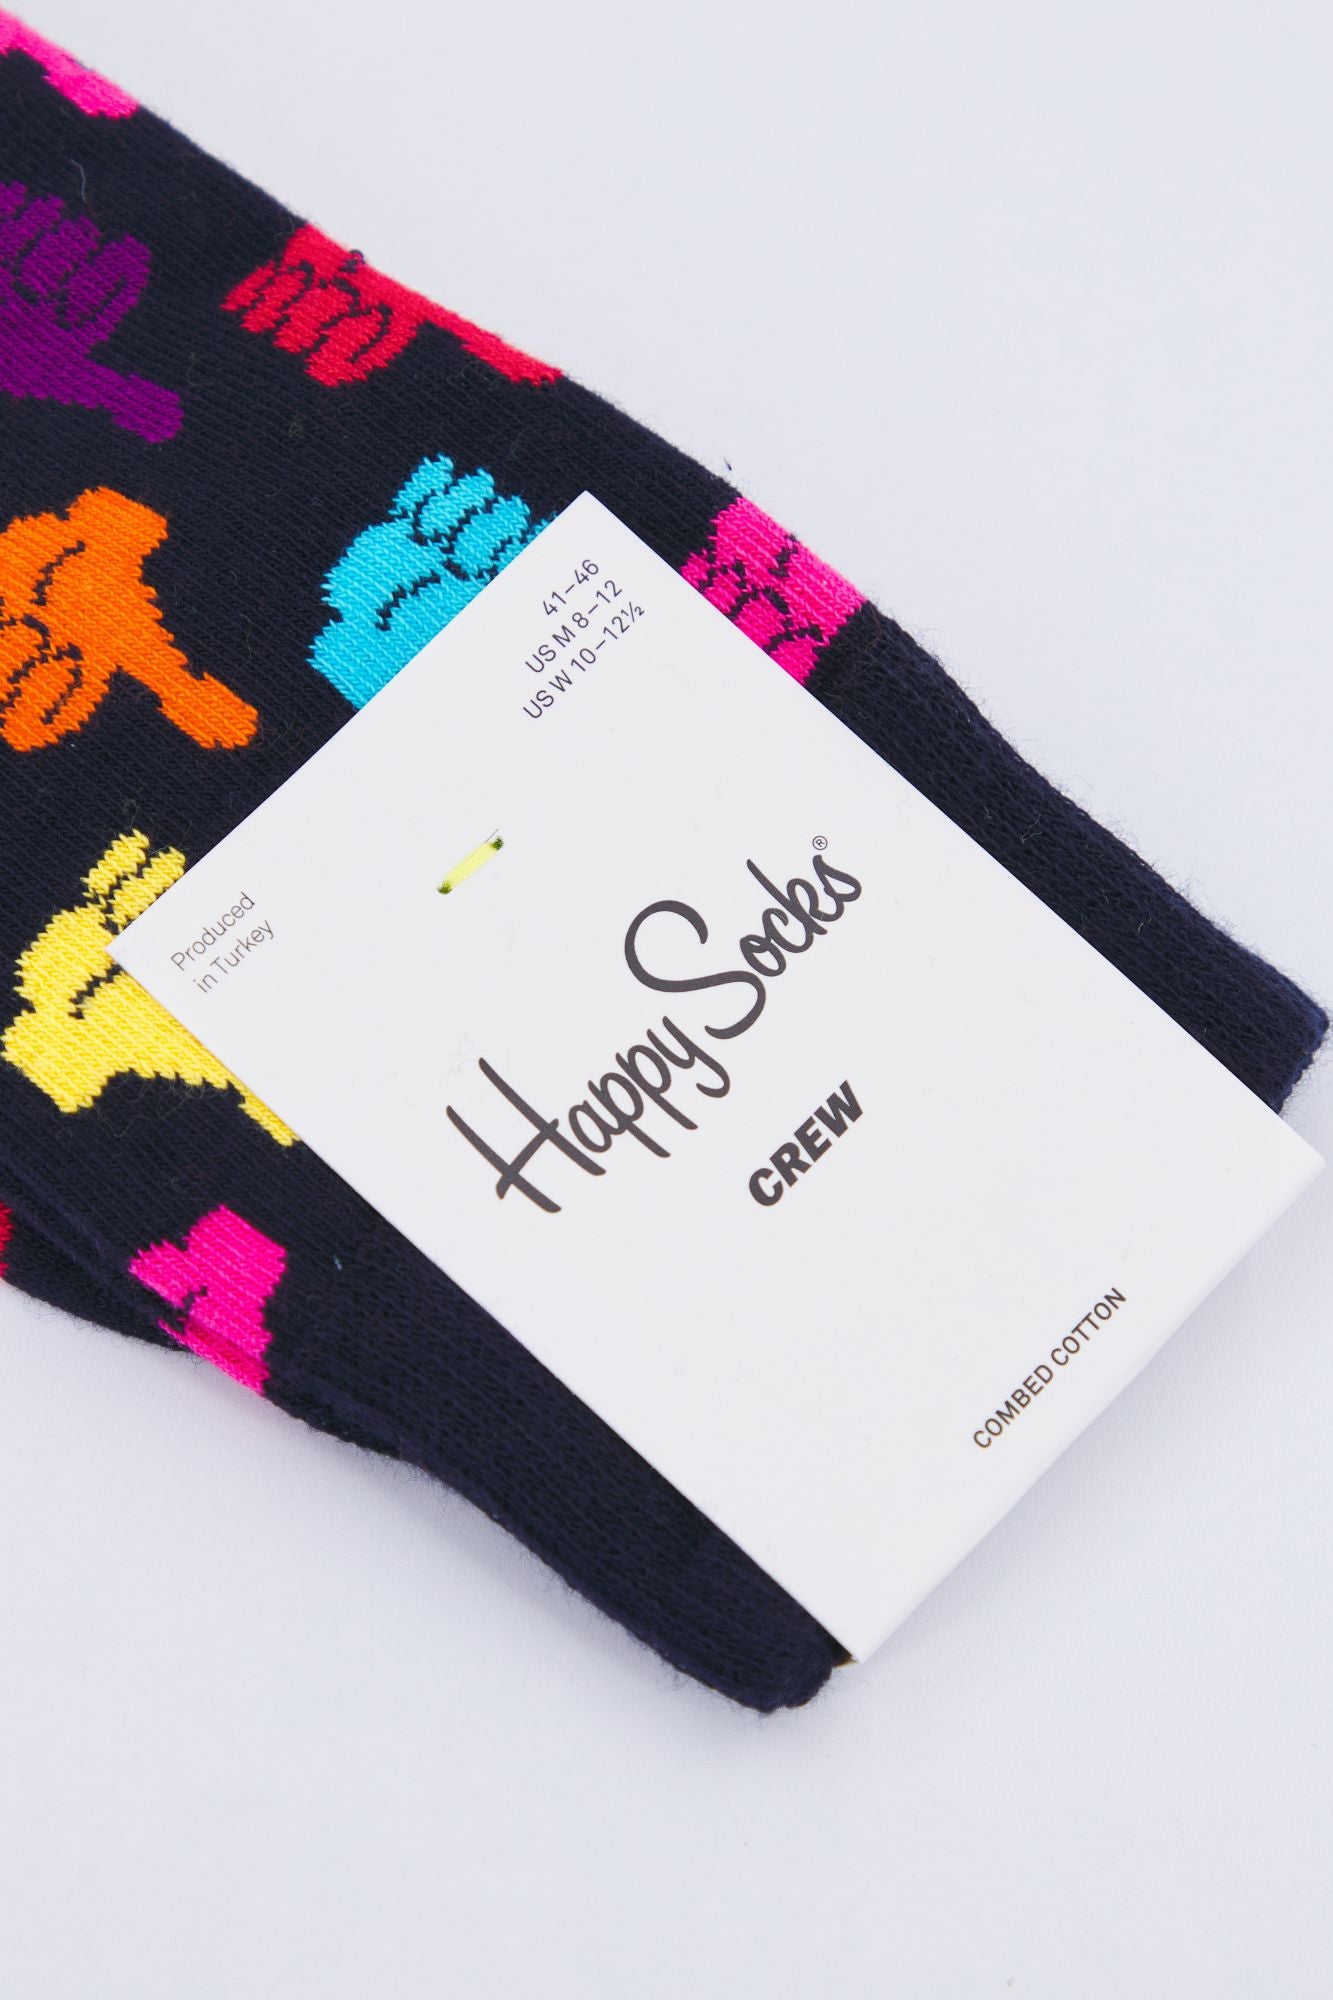 HAPPY SOCKS THU01 6500 en color NEGRO (3)